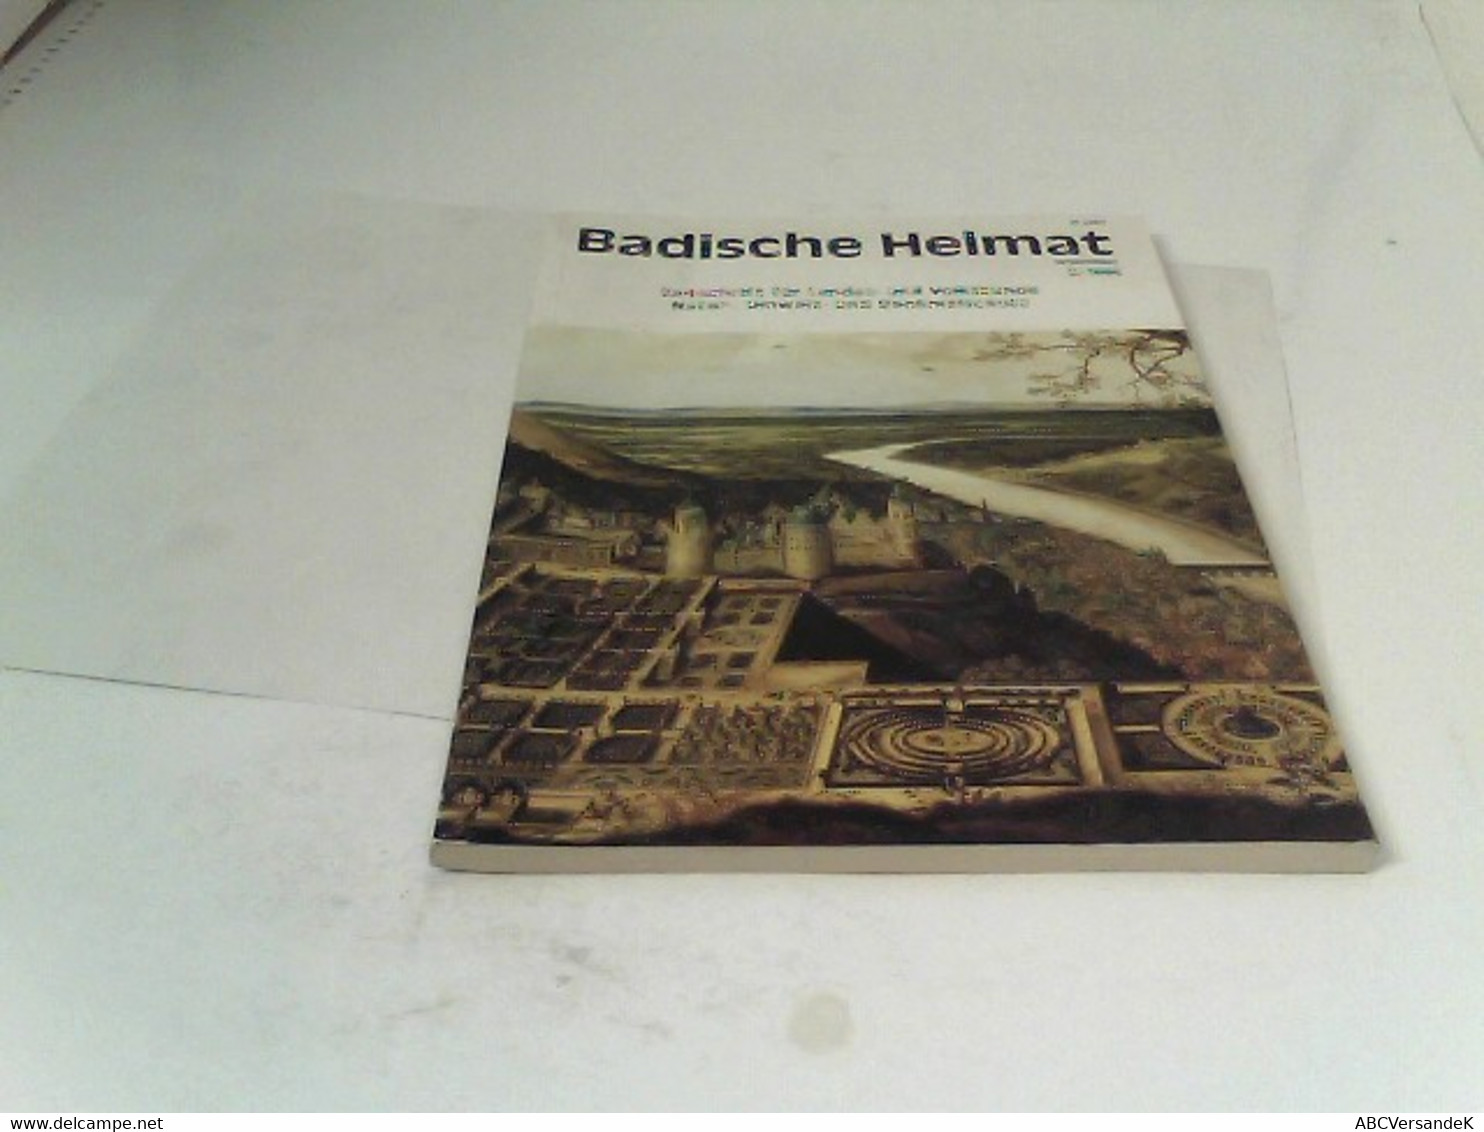 Badische Heimat 76.Jahrgang 1996 Heft 3 - Deutschland Gesamt